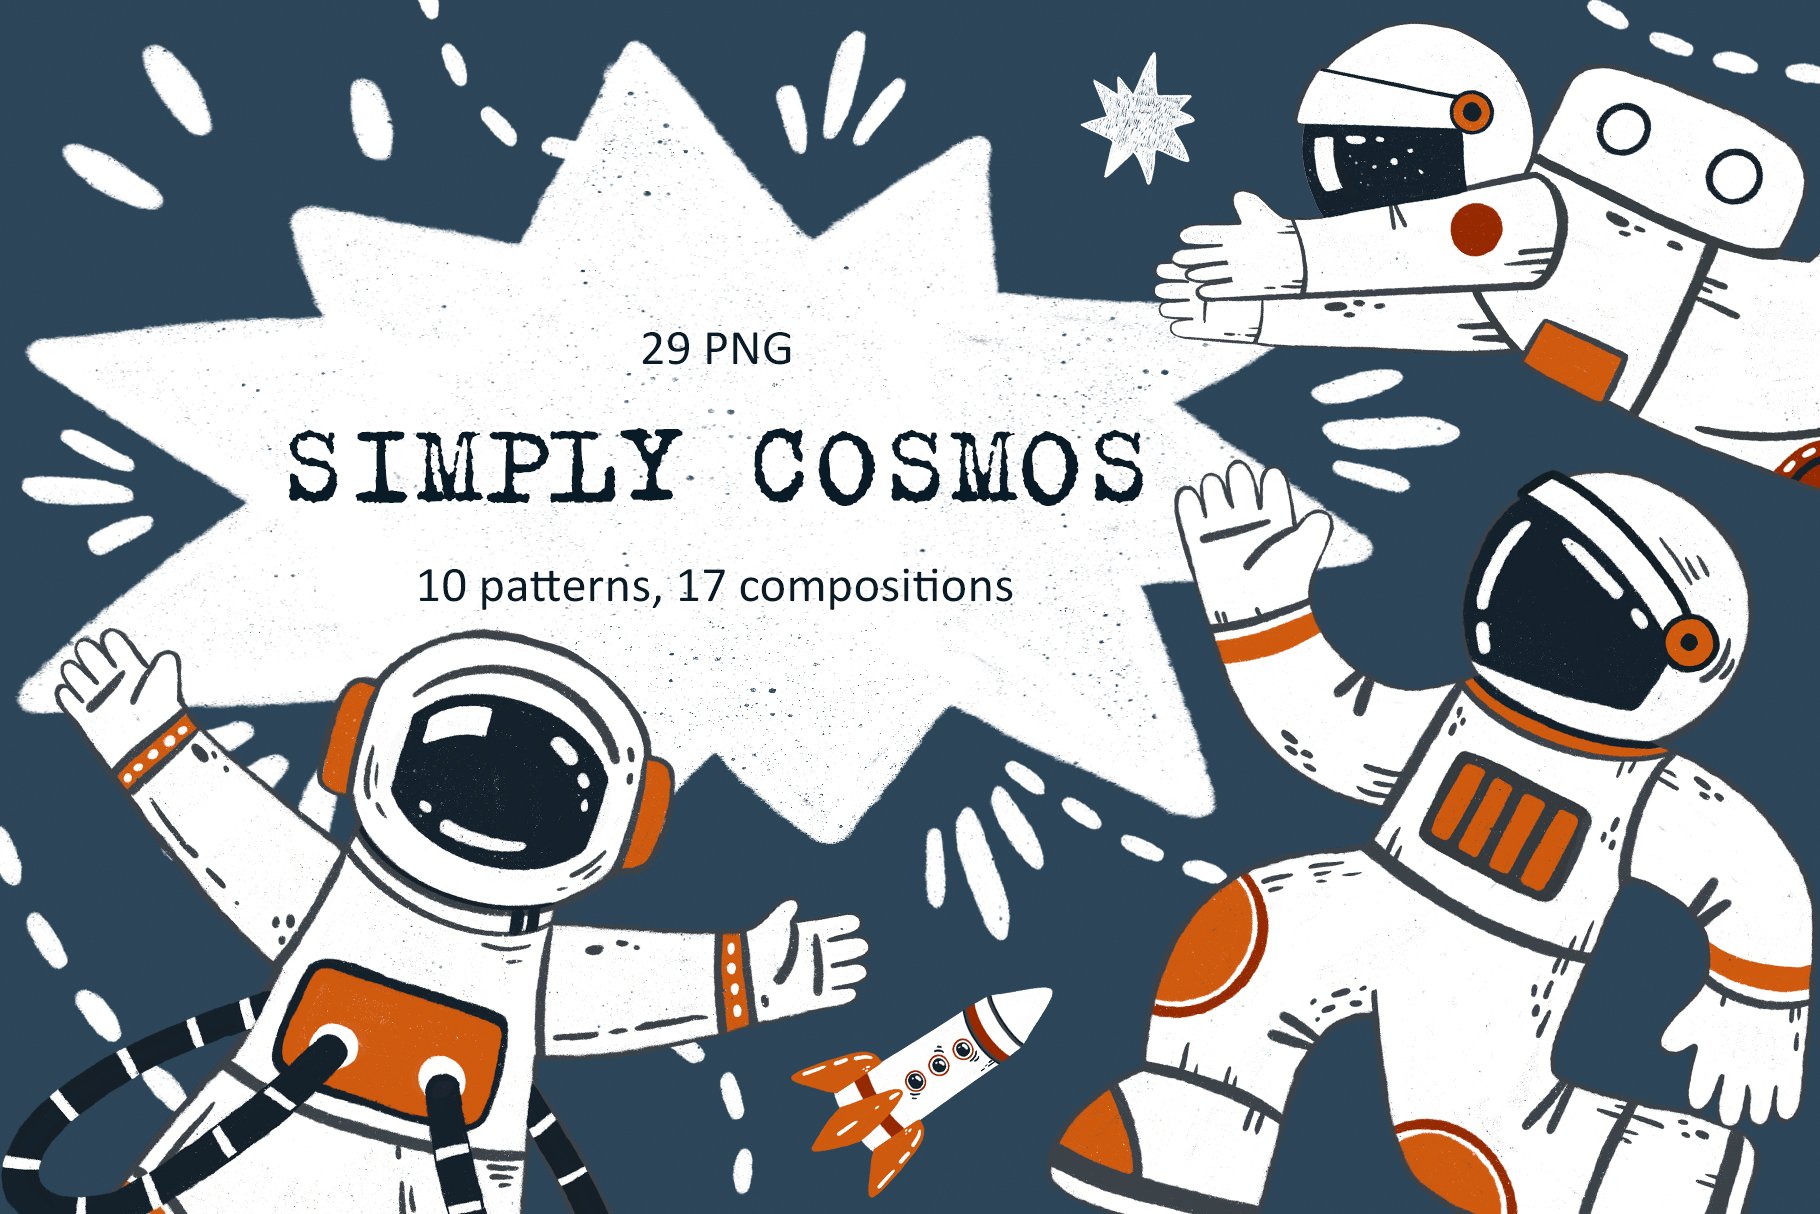 Simply Cosmos - Clip Art Set cover image.